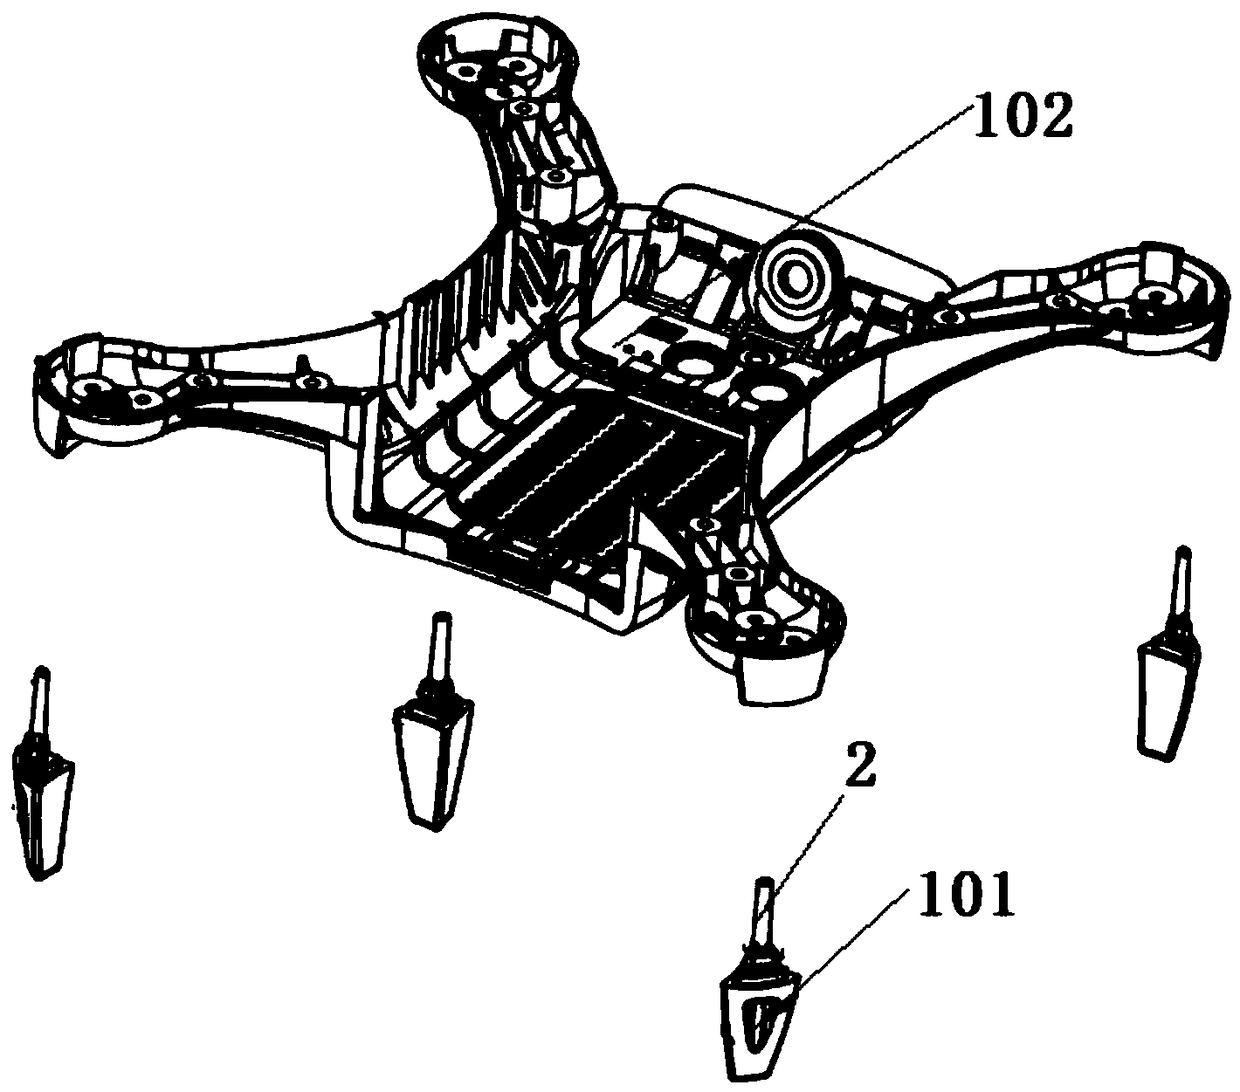 Novel unmanned aerial vehicle